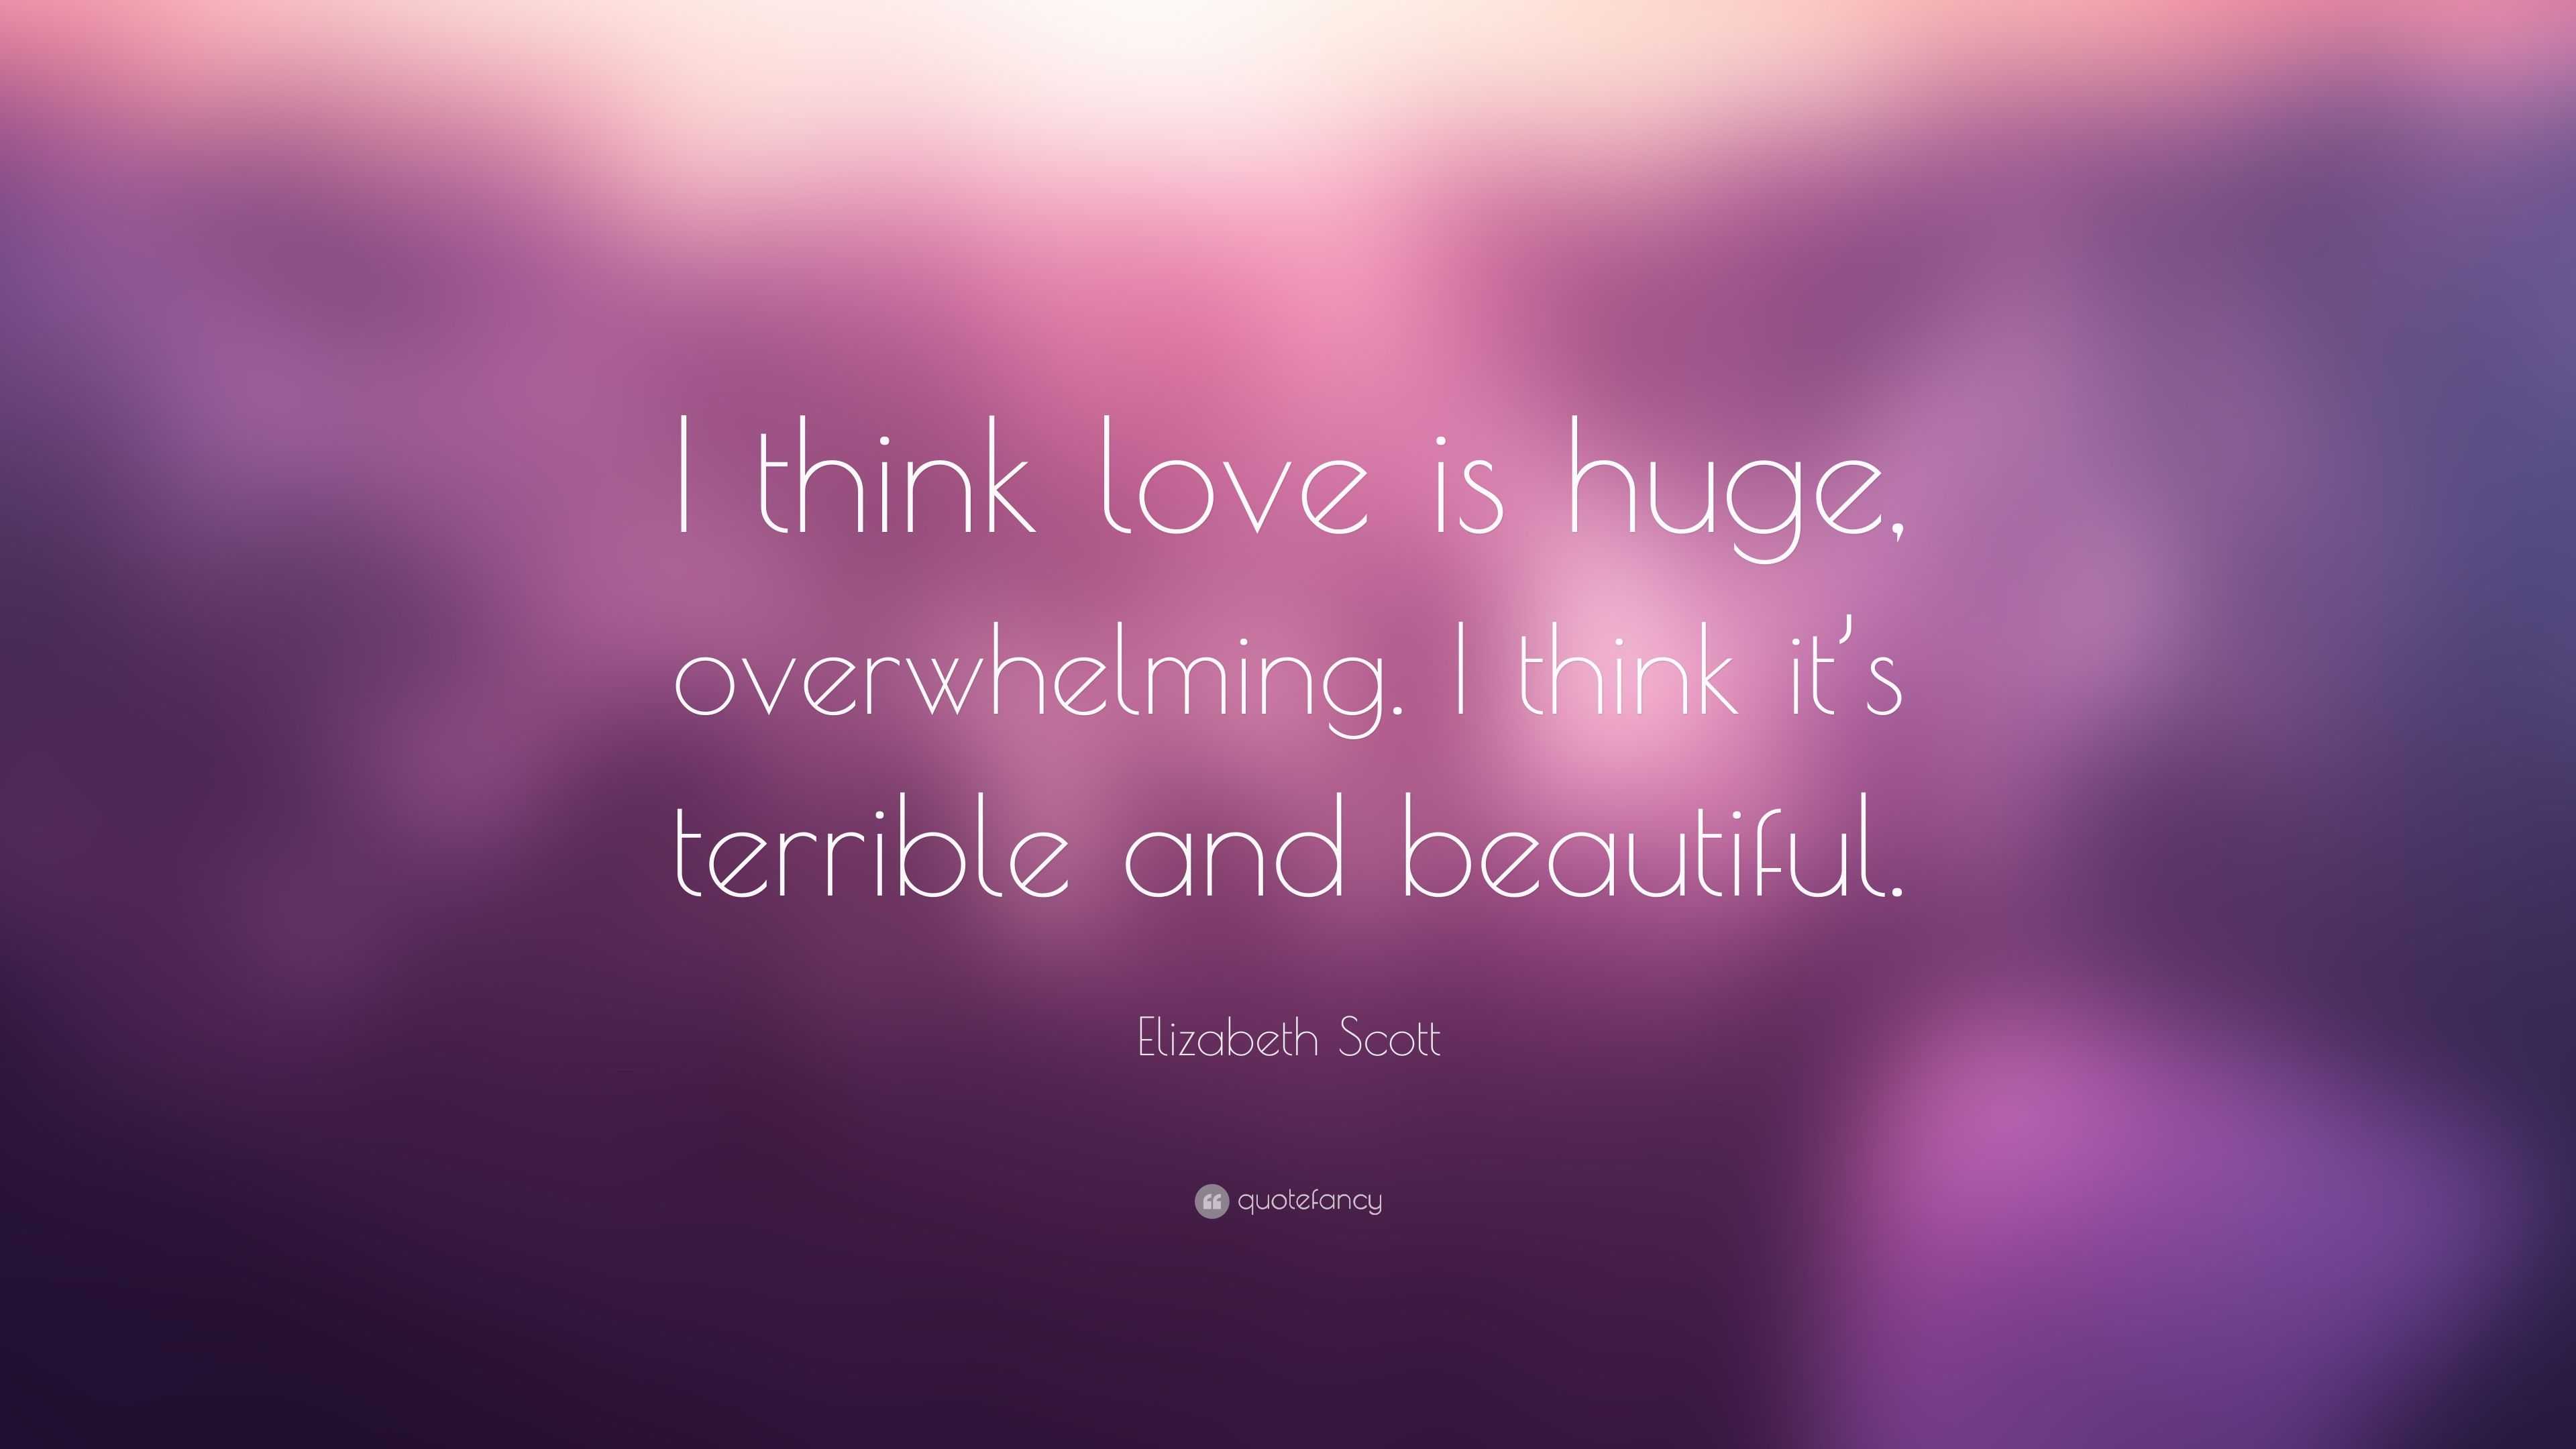 Elizabeth Scott Quote: “I think love is huge, overwhelming. I think it ...